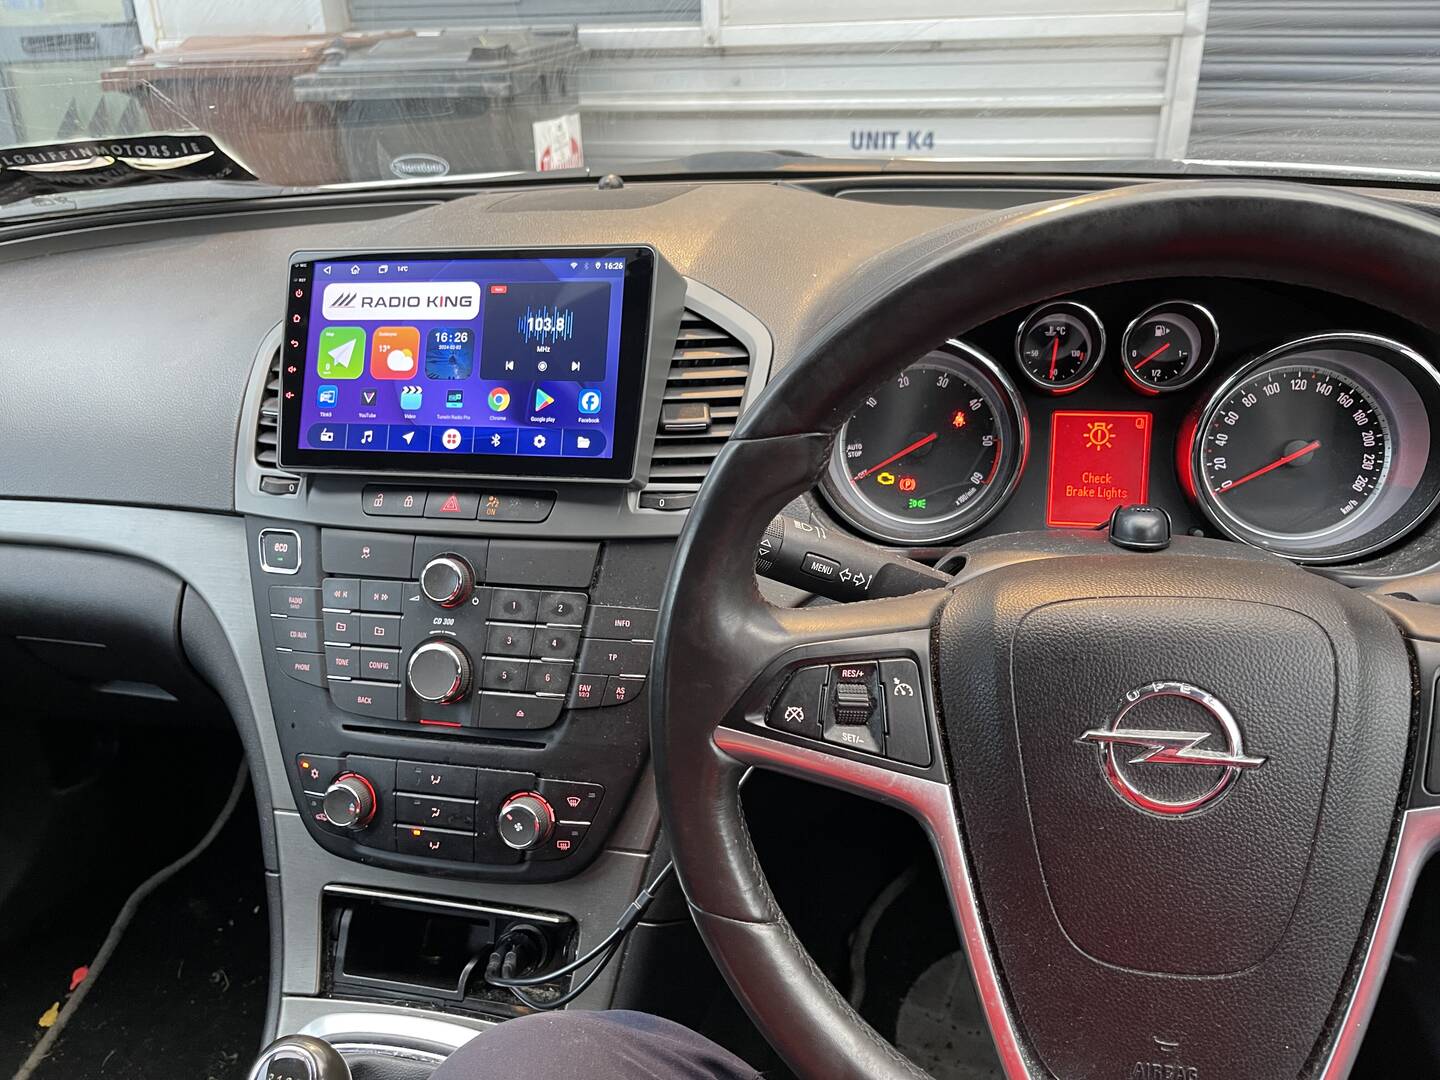 IMG 2834 scaled - Radio King Ireland - Android Car Radios and CarPlay Systems